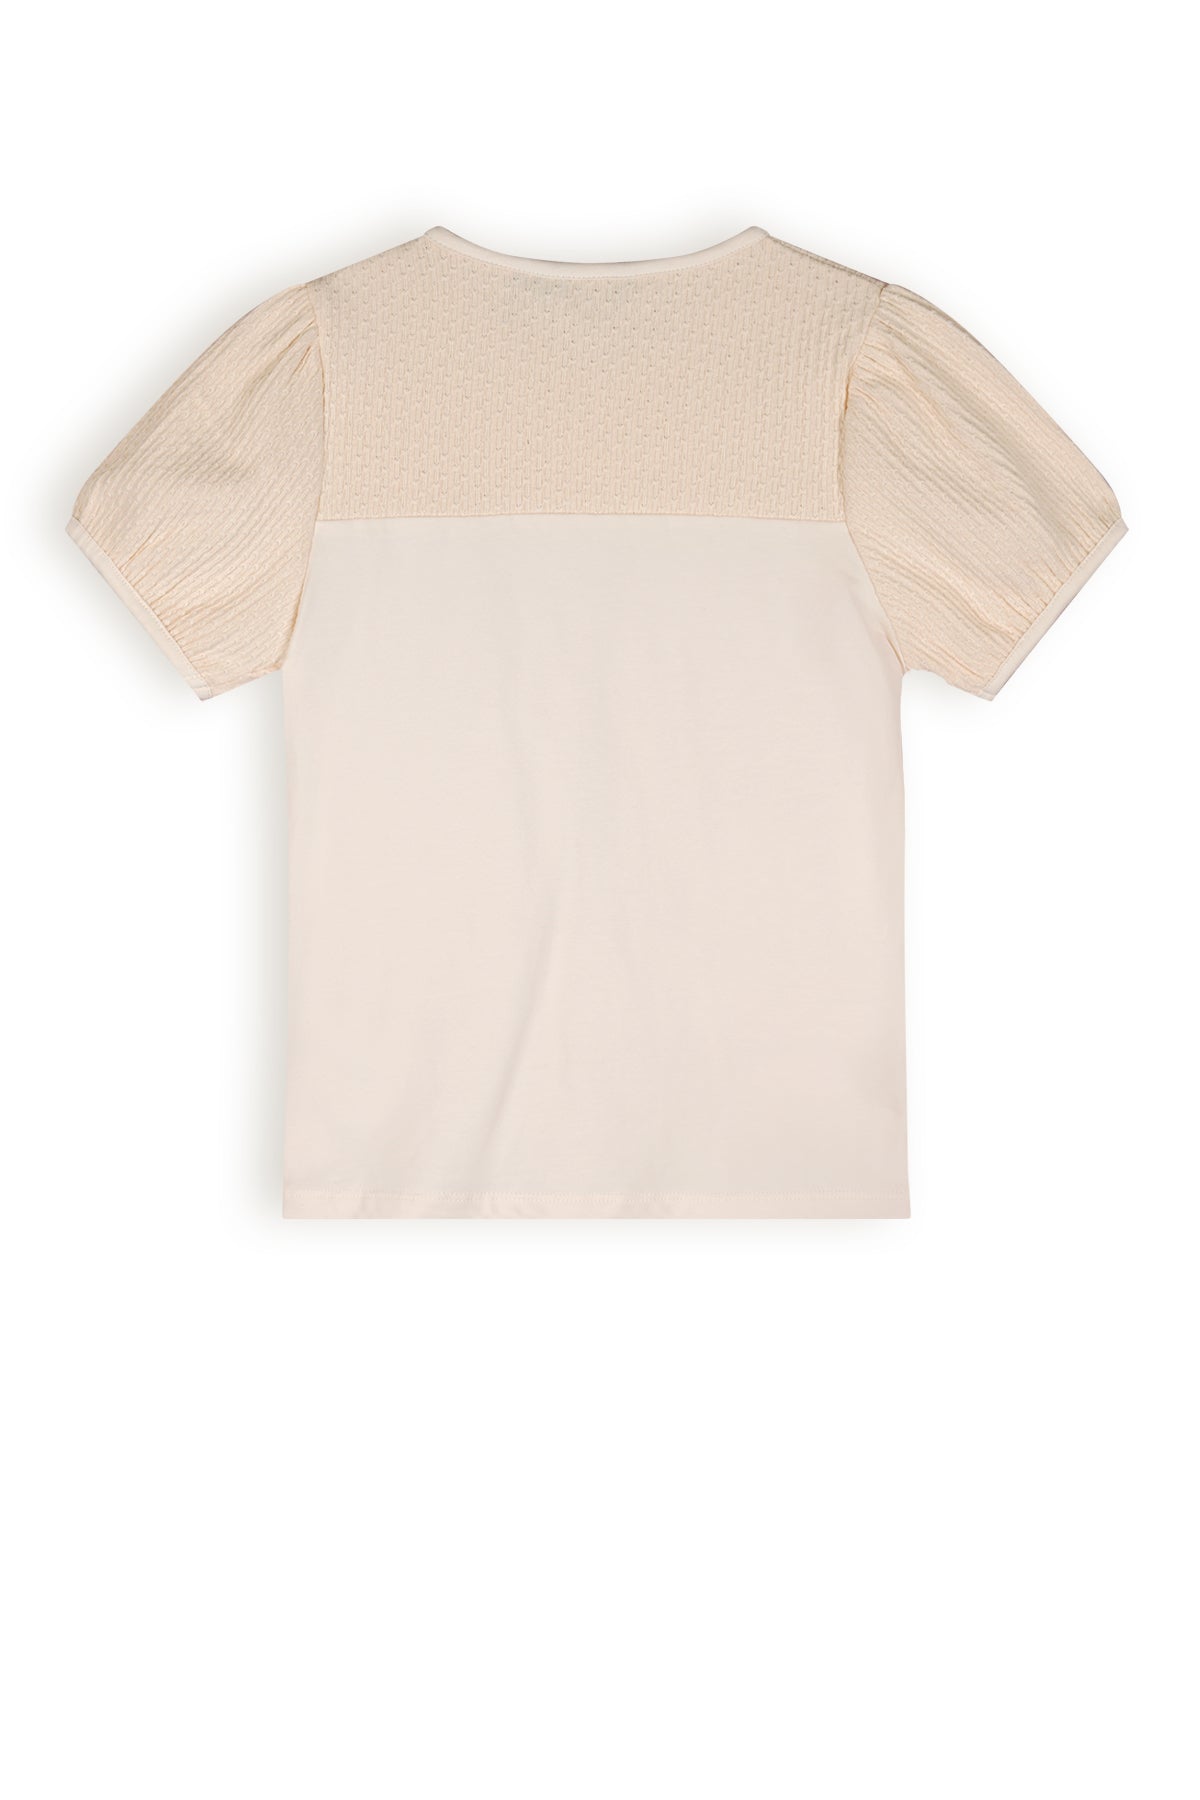 NoNo Karen T-Shirt Mixed Fabris Puffed Short Sleeves